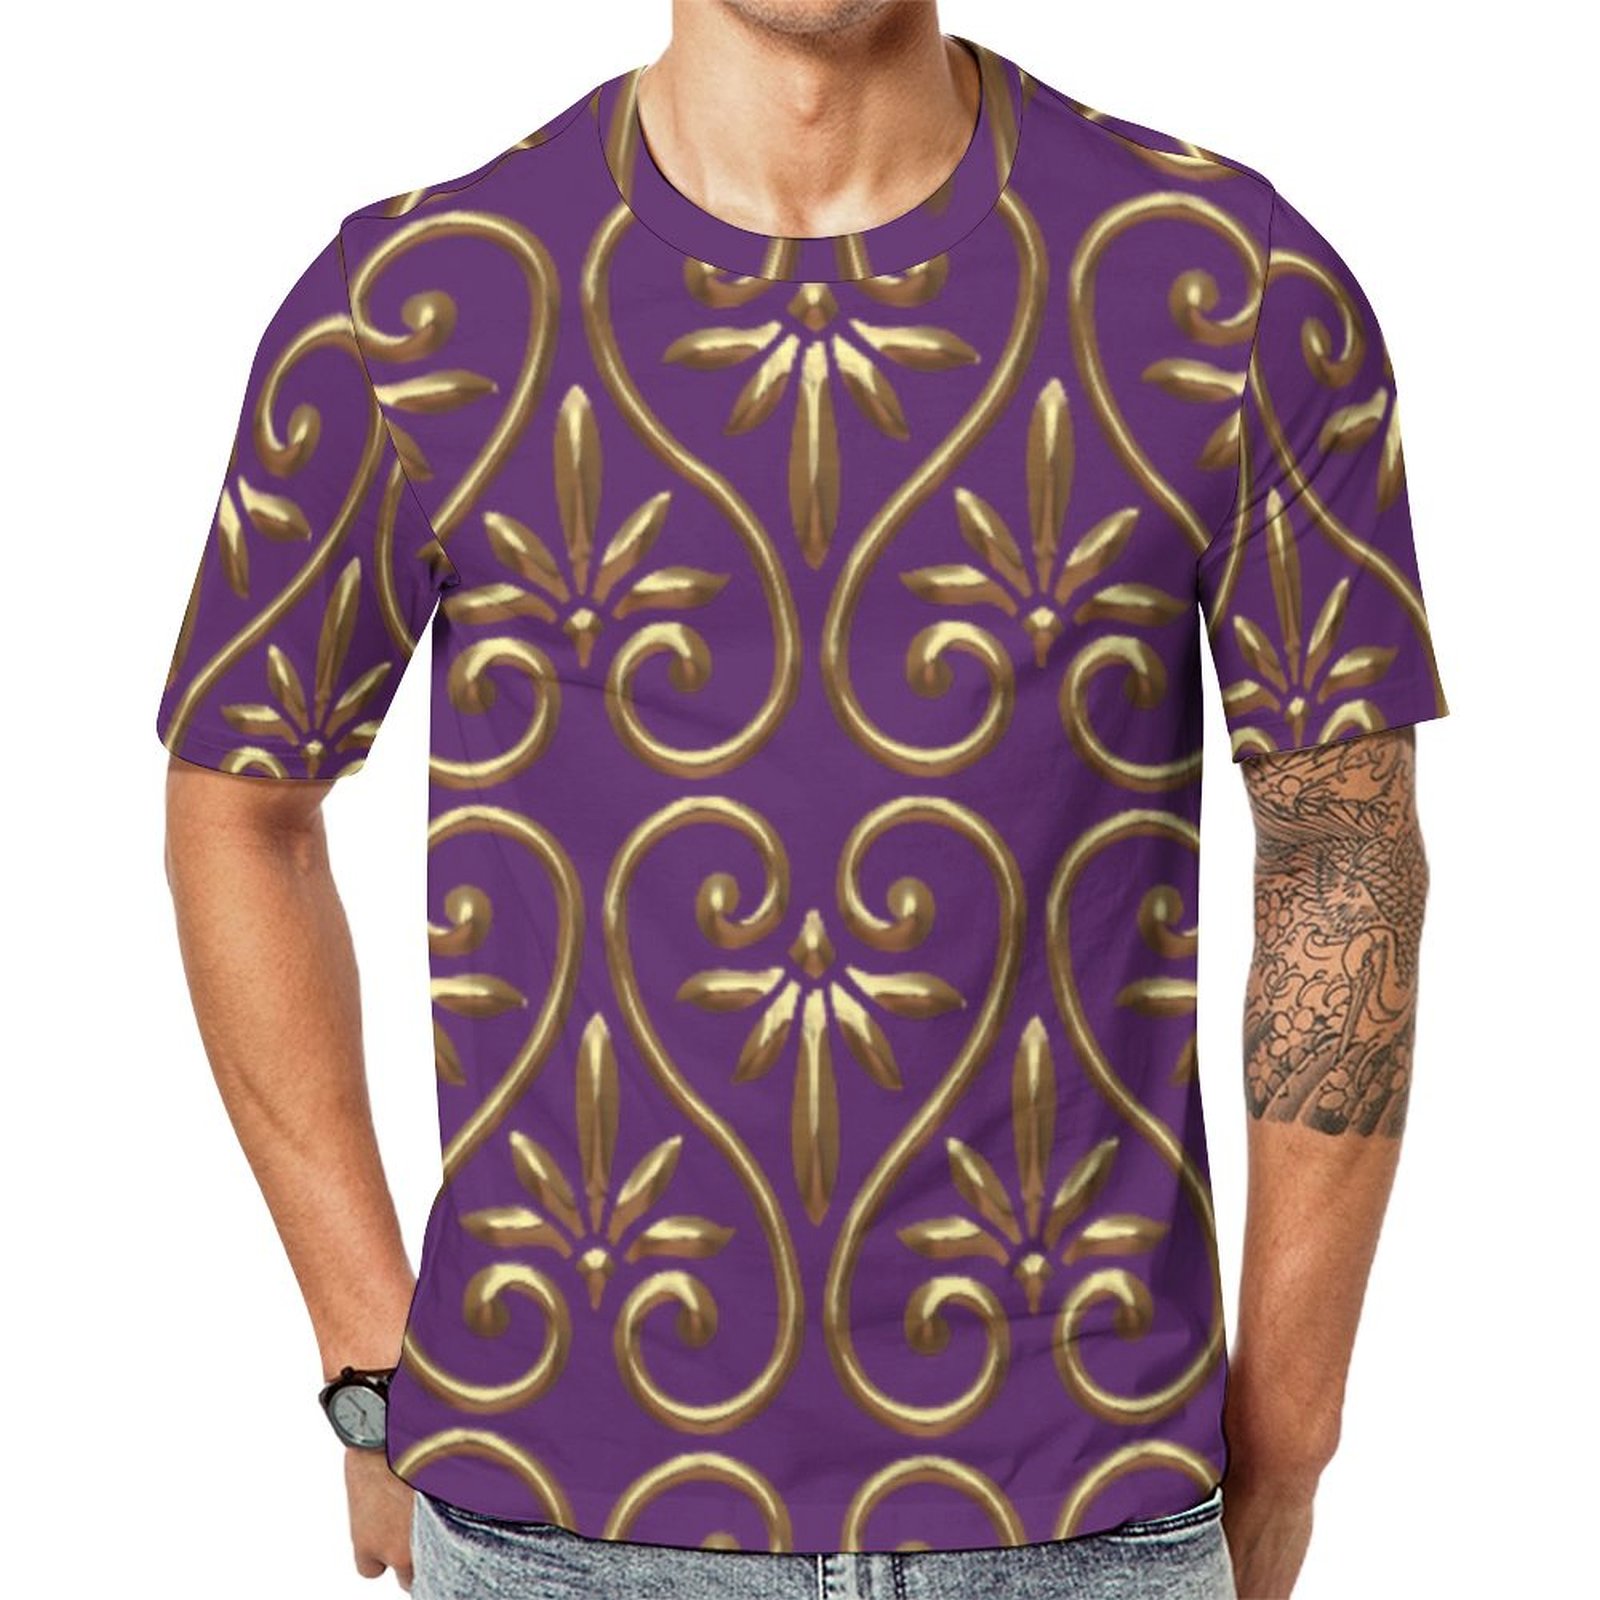 Elegant Chic Ornate Classy Antique Damask Short Sleeve Print Unisex Tshirt Summer Casual Tees for Men and Women Coolcoshirts